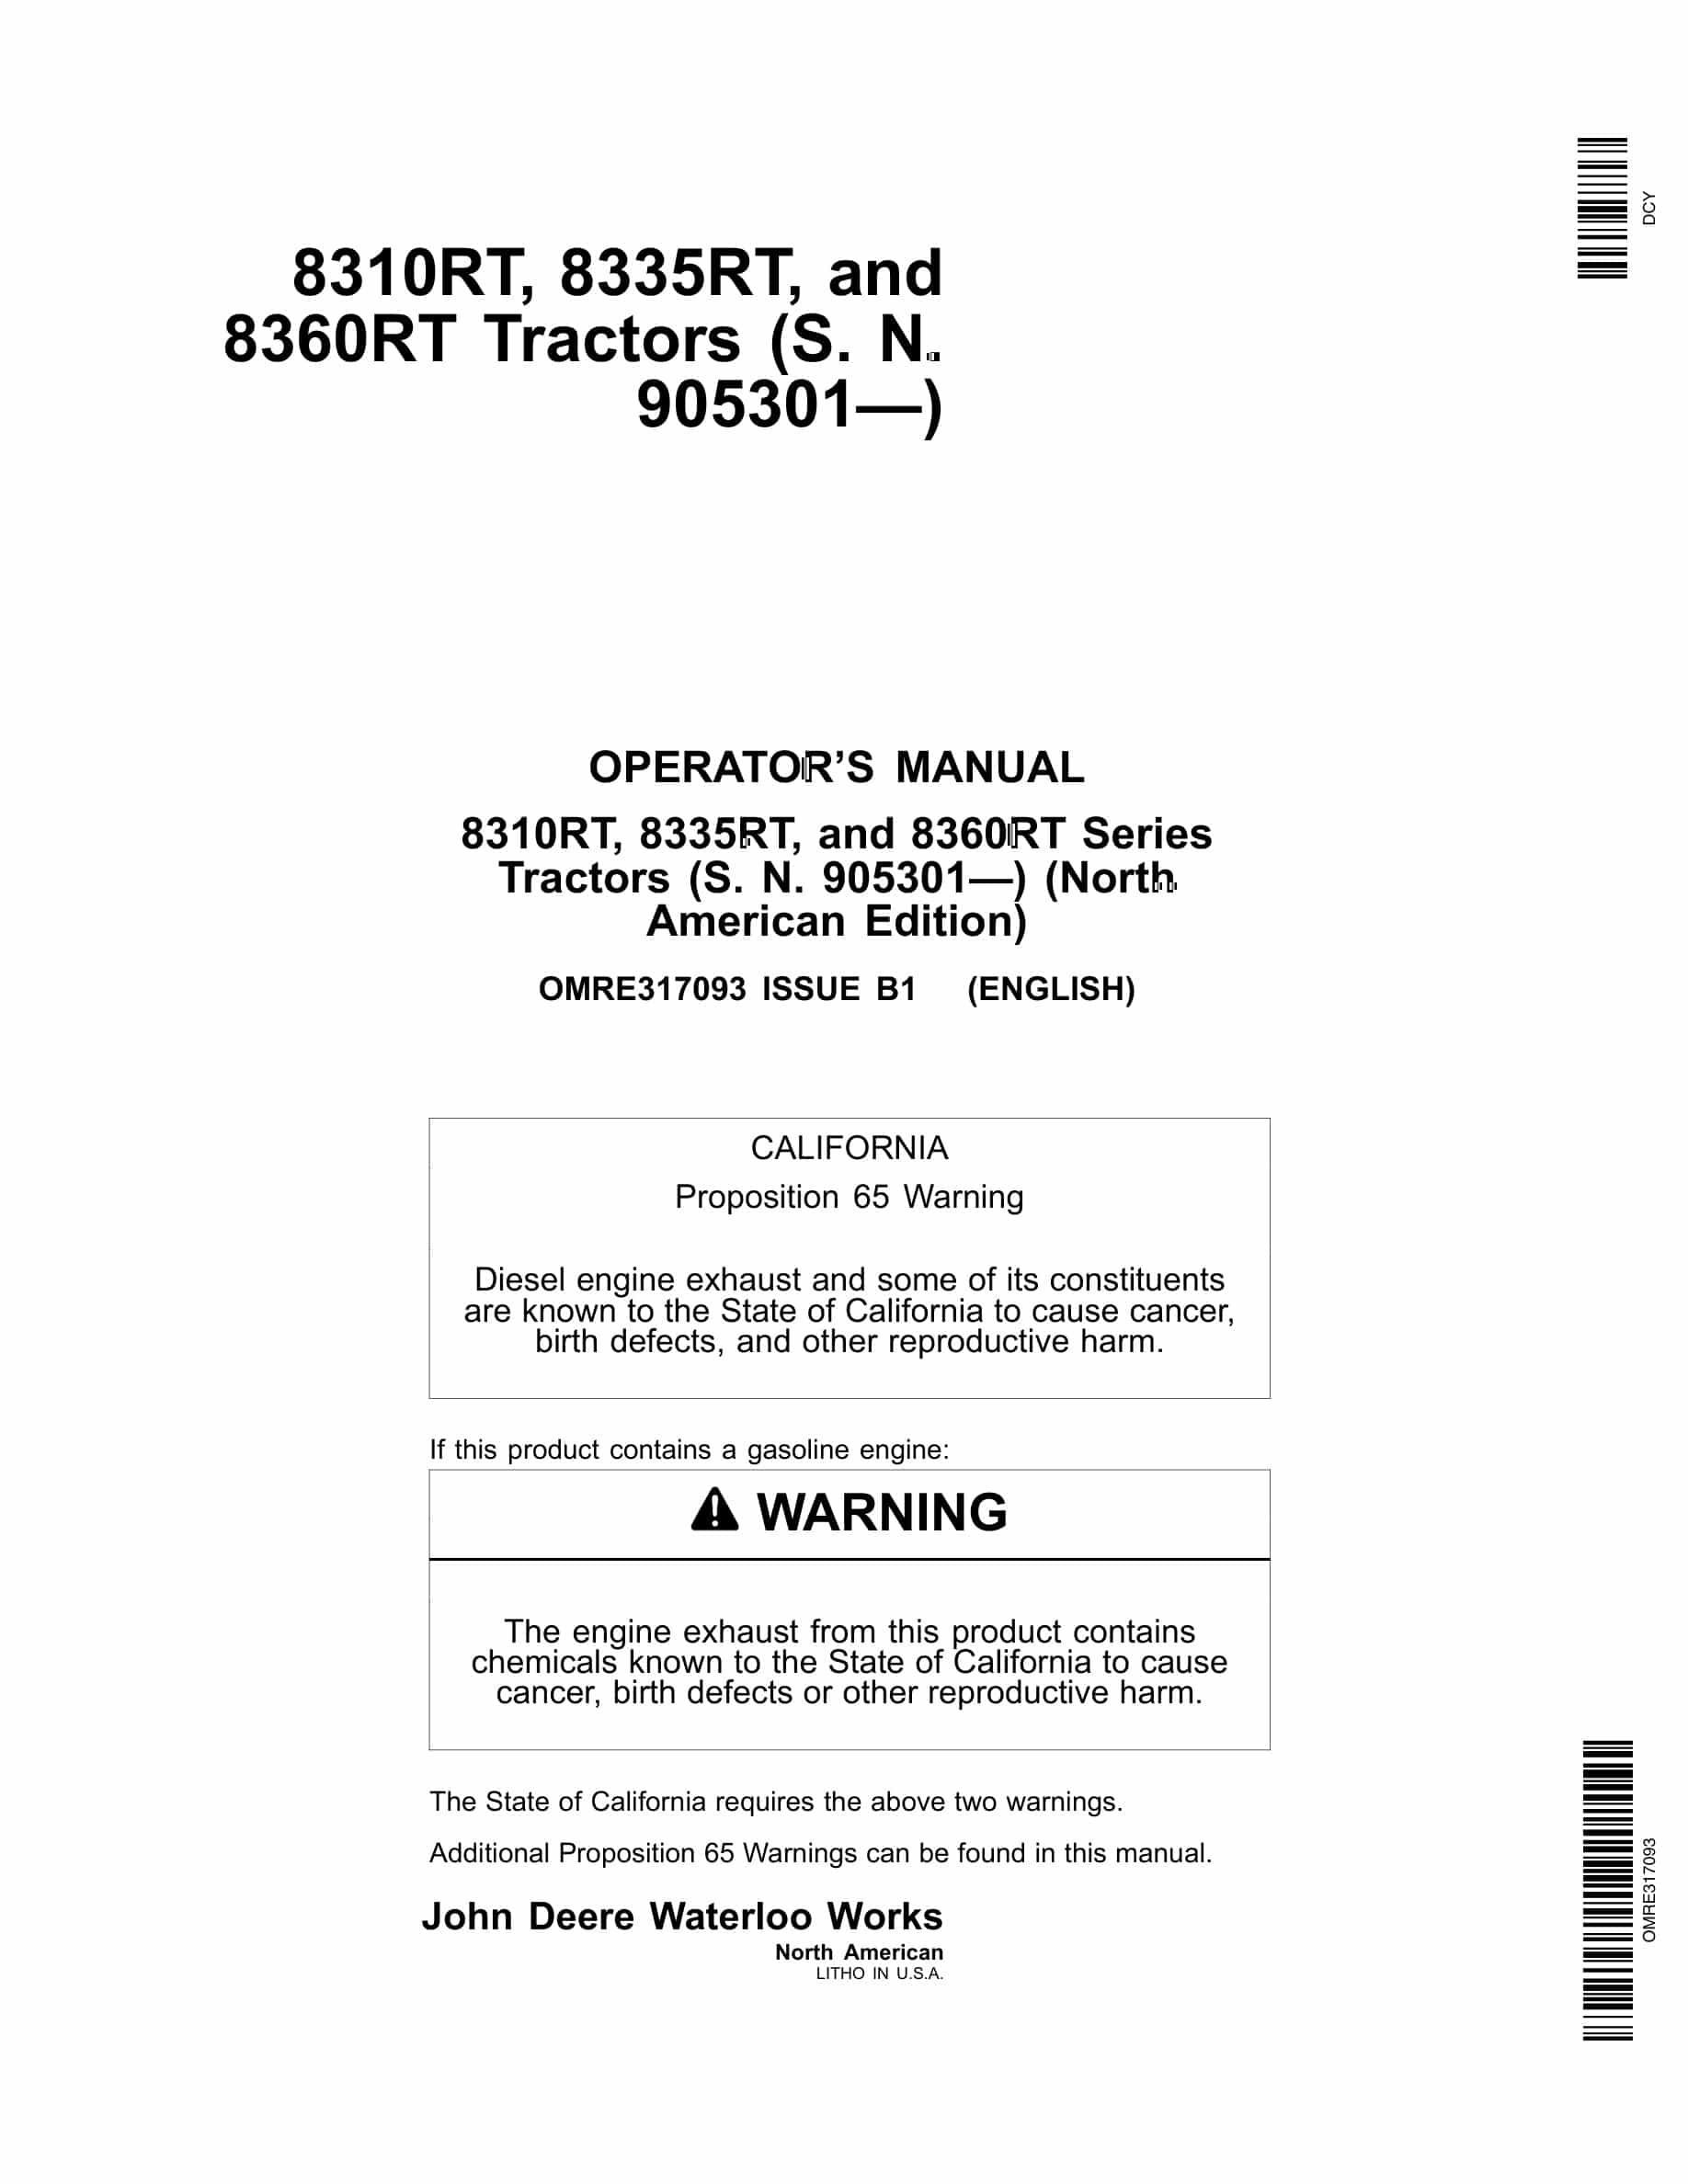 John Deere 8310RT, 8335RT, and 8360RT Tractor Operator Manual OMRE317093-1